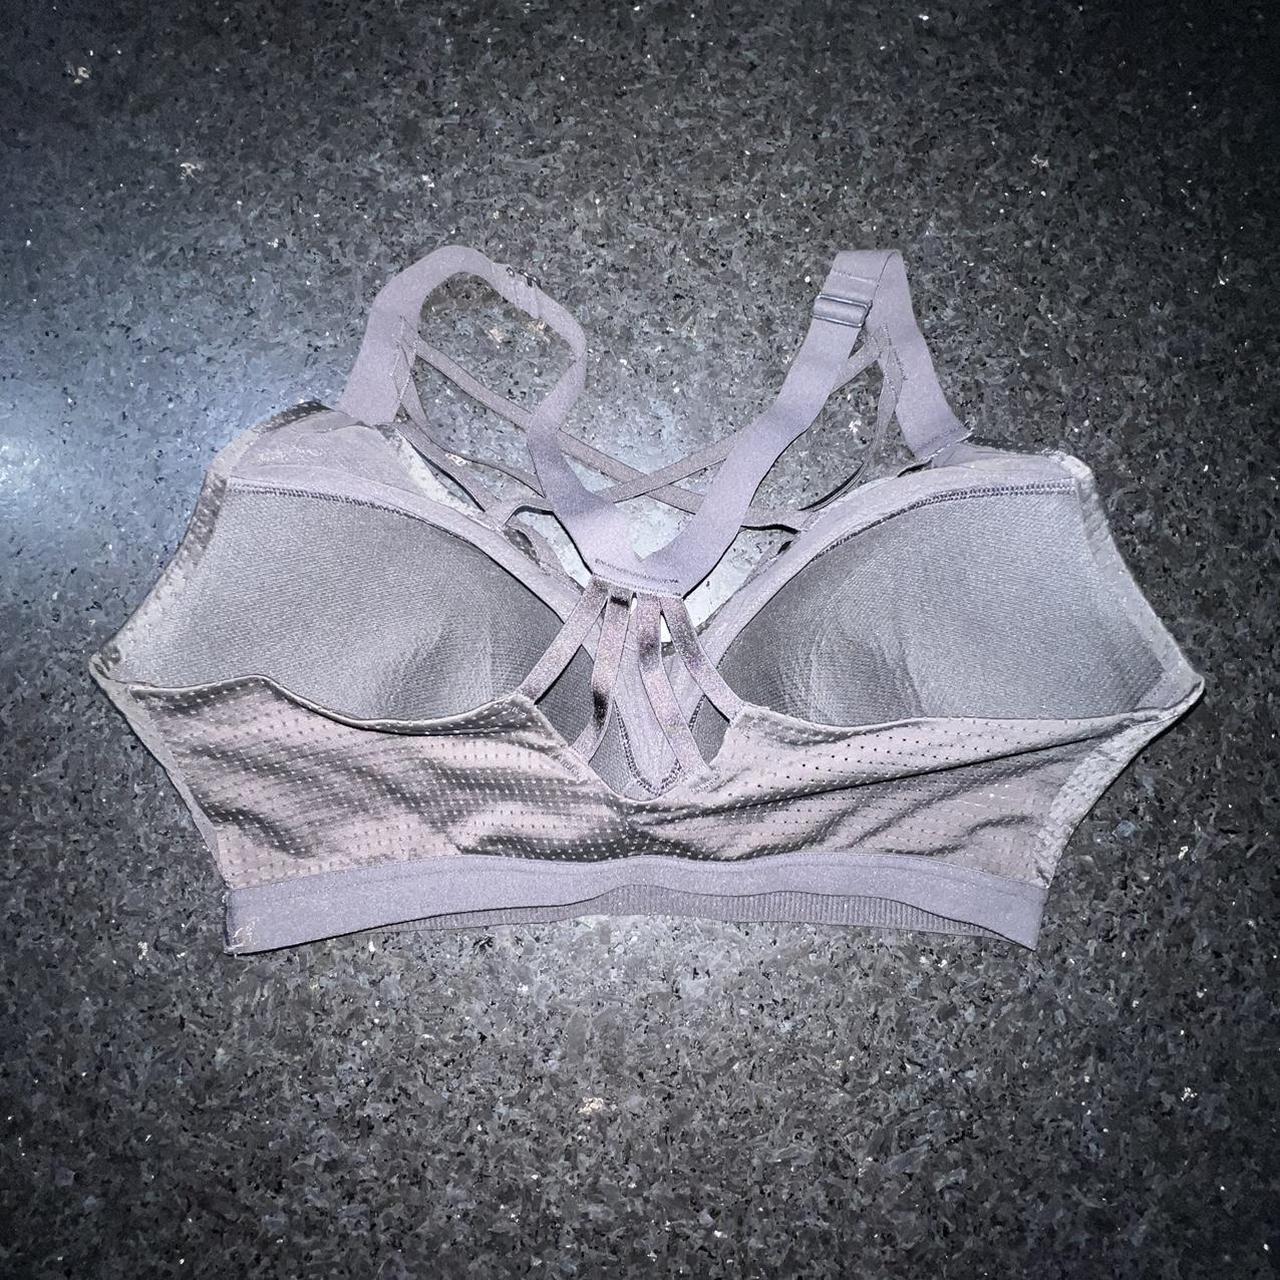 Victoria's Secret VSX sport bra Black mesh strappy - Depop